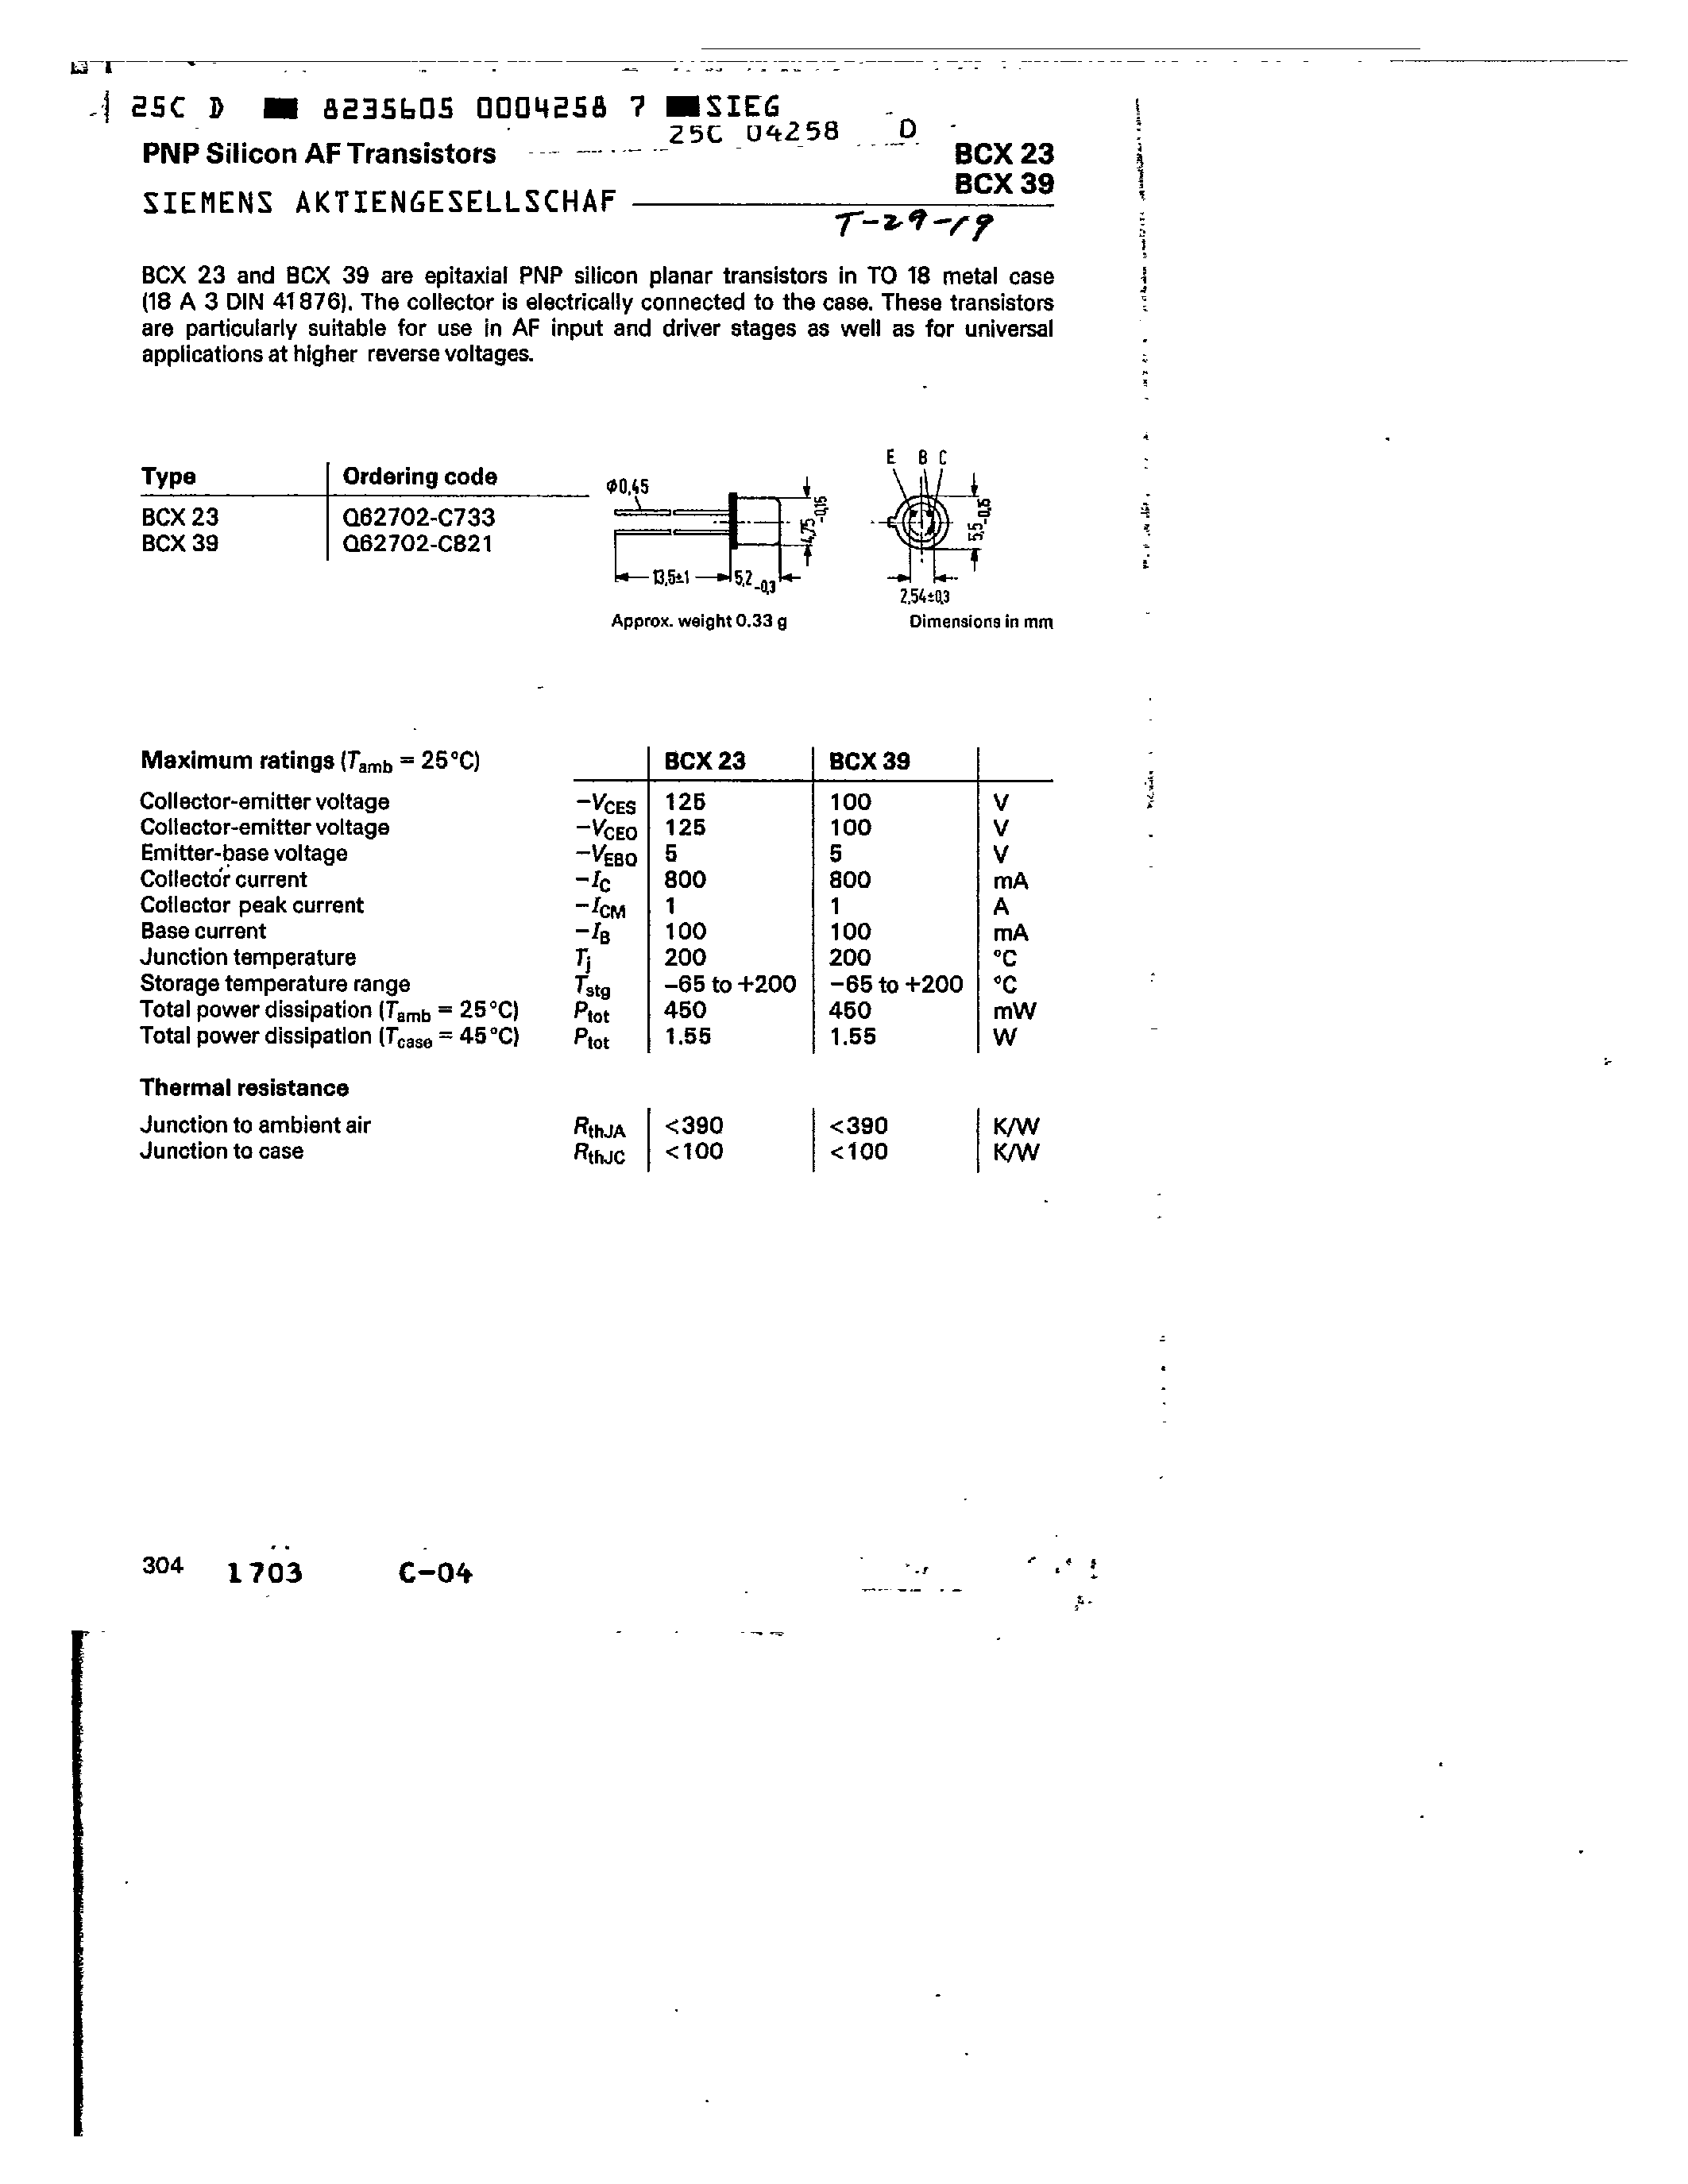 Datasheet BCX23 - PNP SILICON AF TRANSISTORS page 1